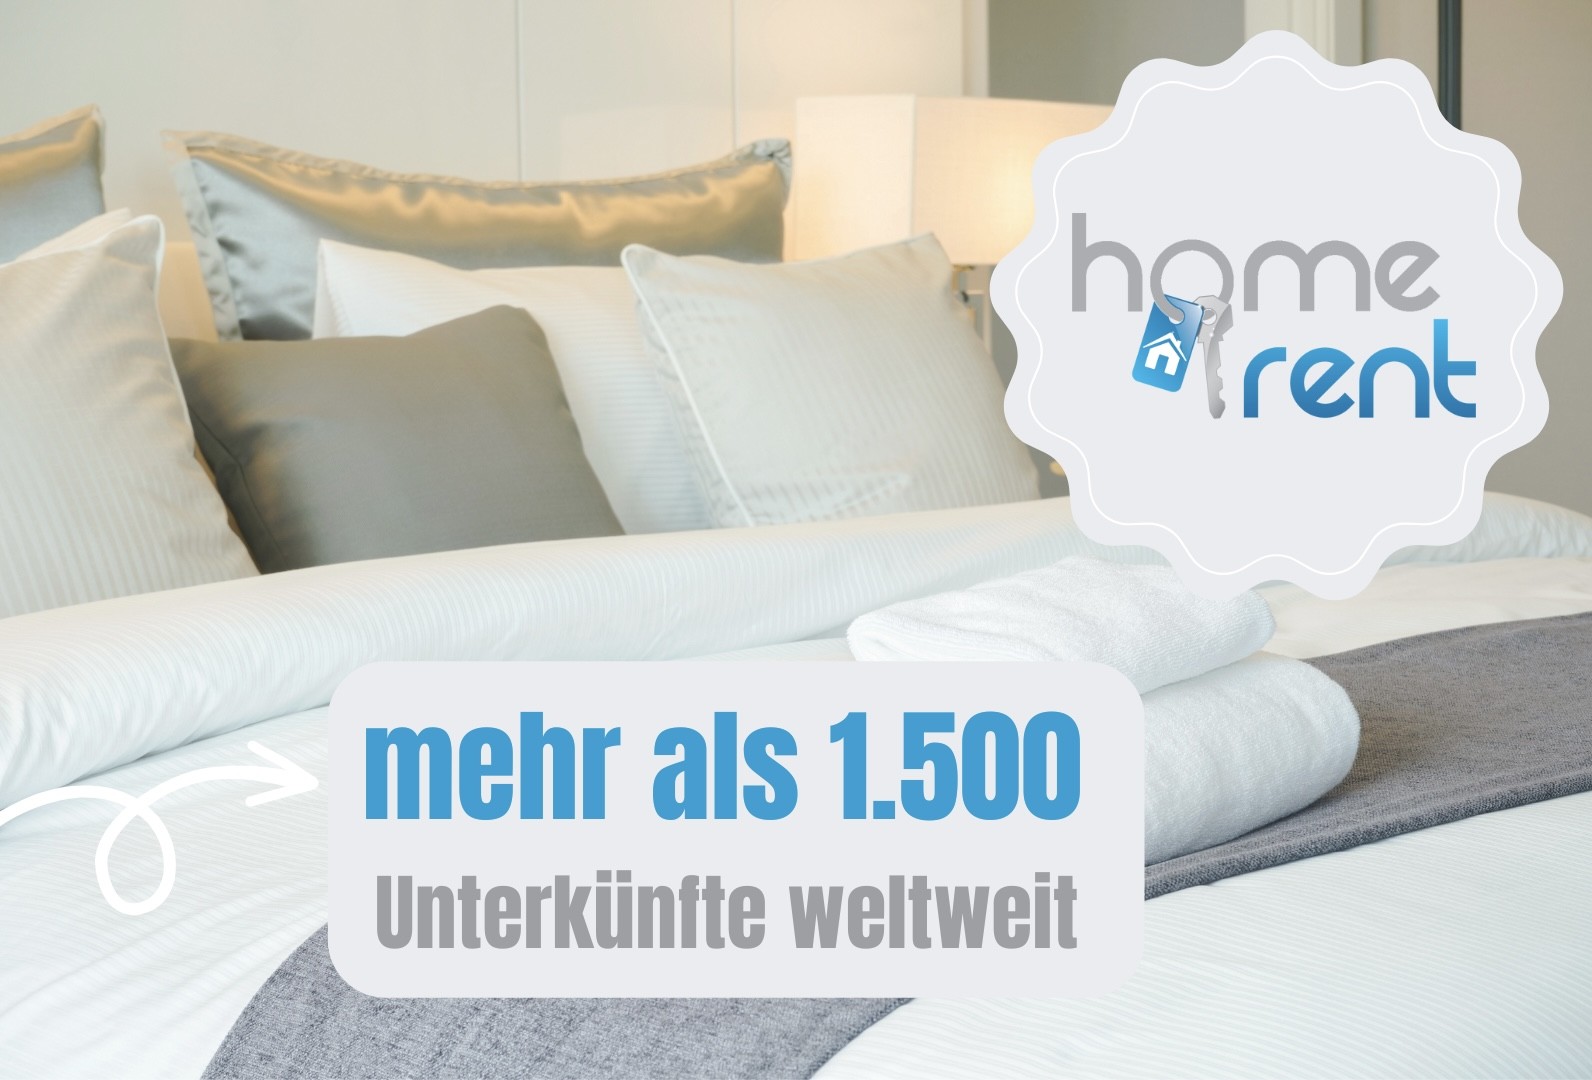 Monteurwohnung HomeRent in Essen &amp; Umgebung  Homerent Immobilien GmbH 45127  1714401977_662fb2b9de530